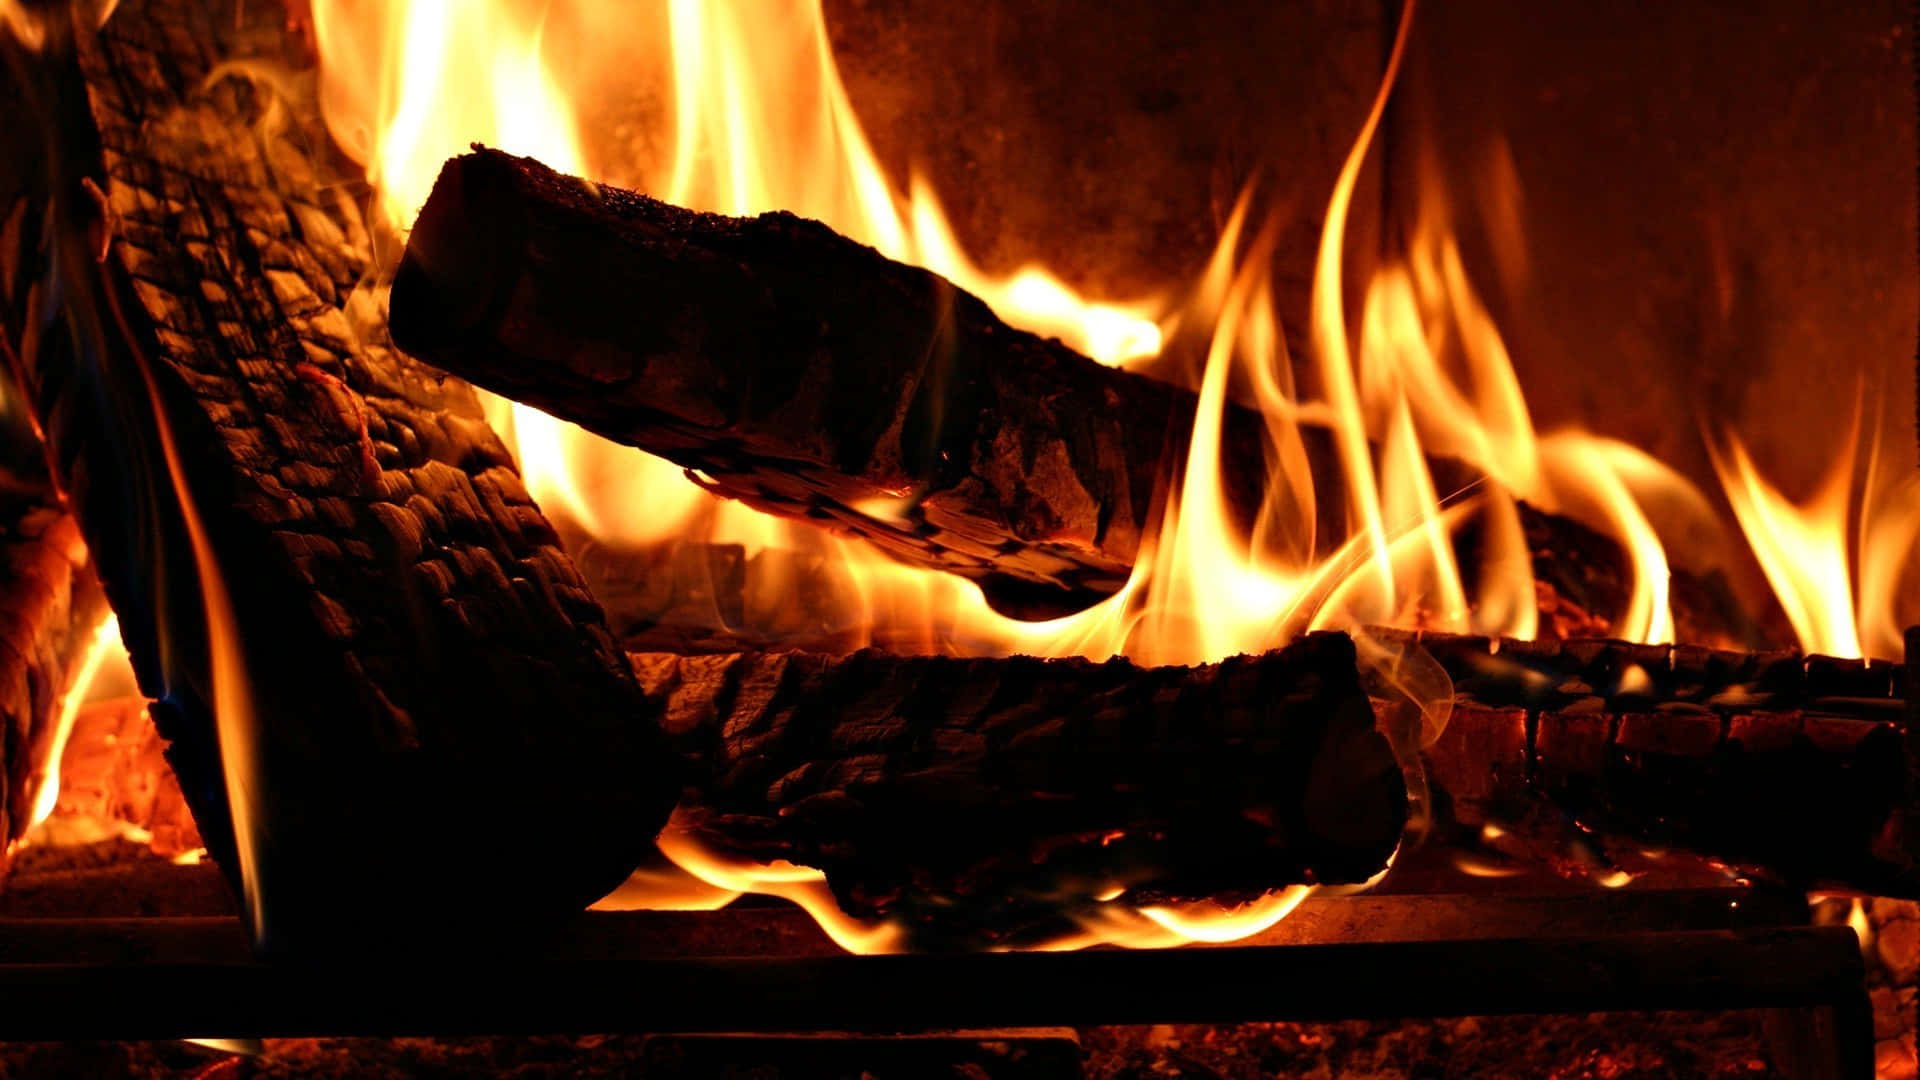 Experience the Cozy Fireside Feeling